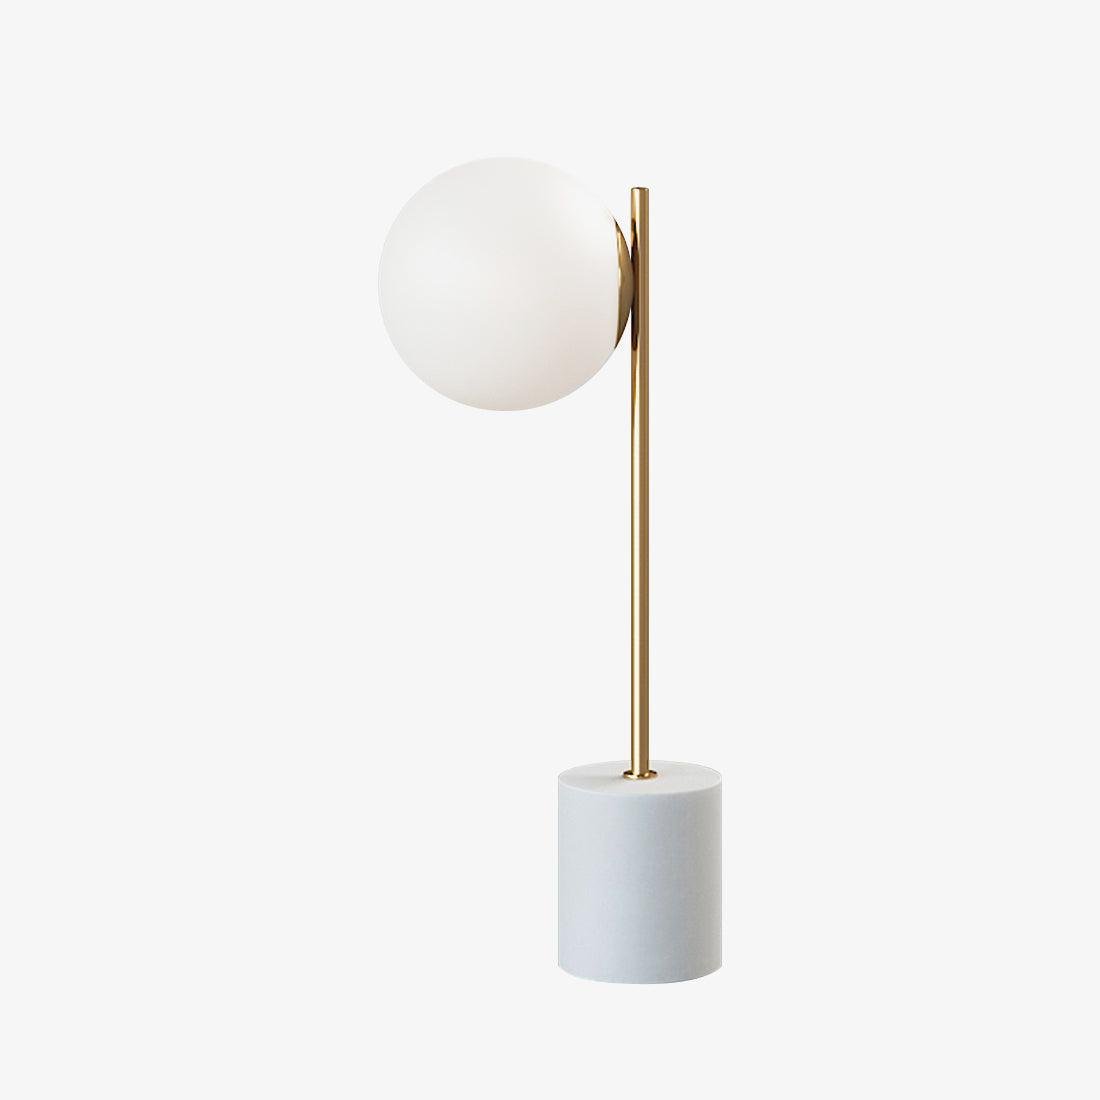 Sphere & Stem Table Lamp ∅ 8.7″ x H 22.8″ , Dia 22cm x H 58cm , Gold+White , UK plug